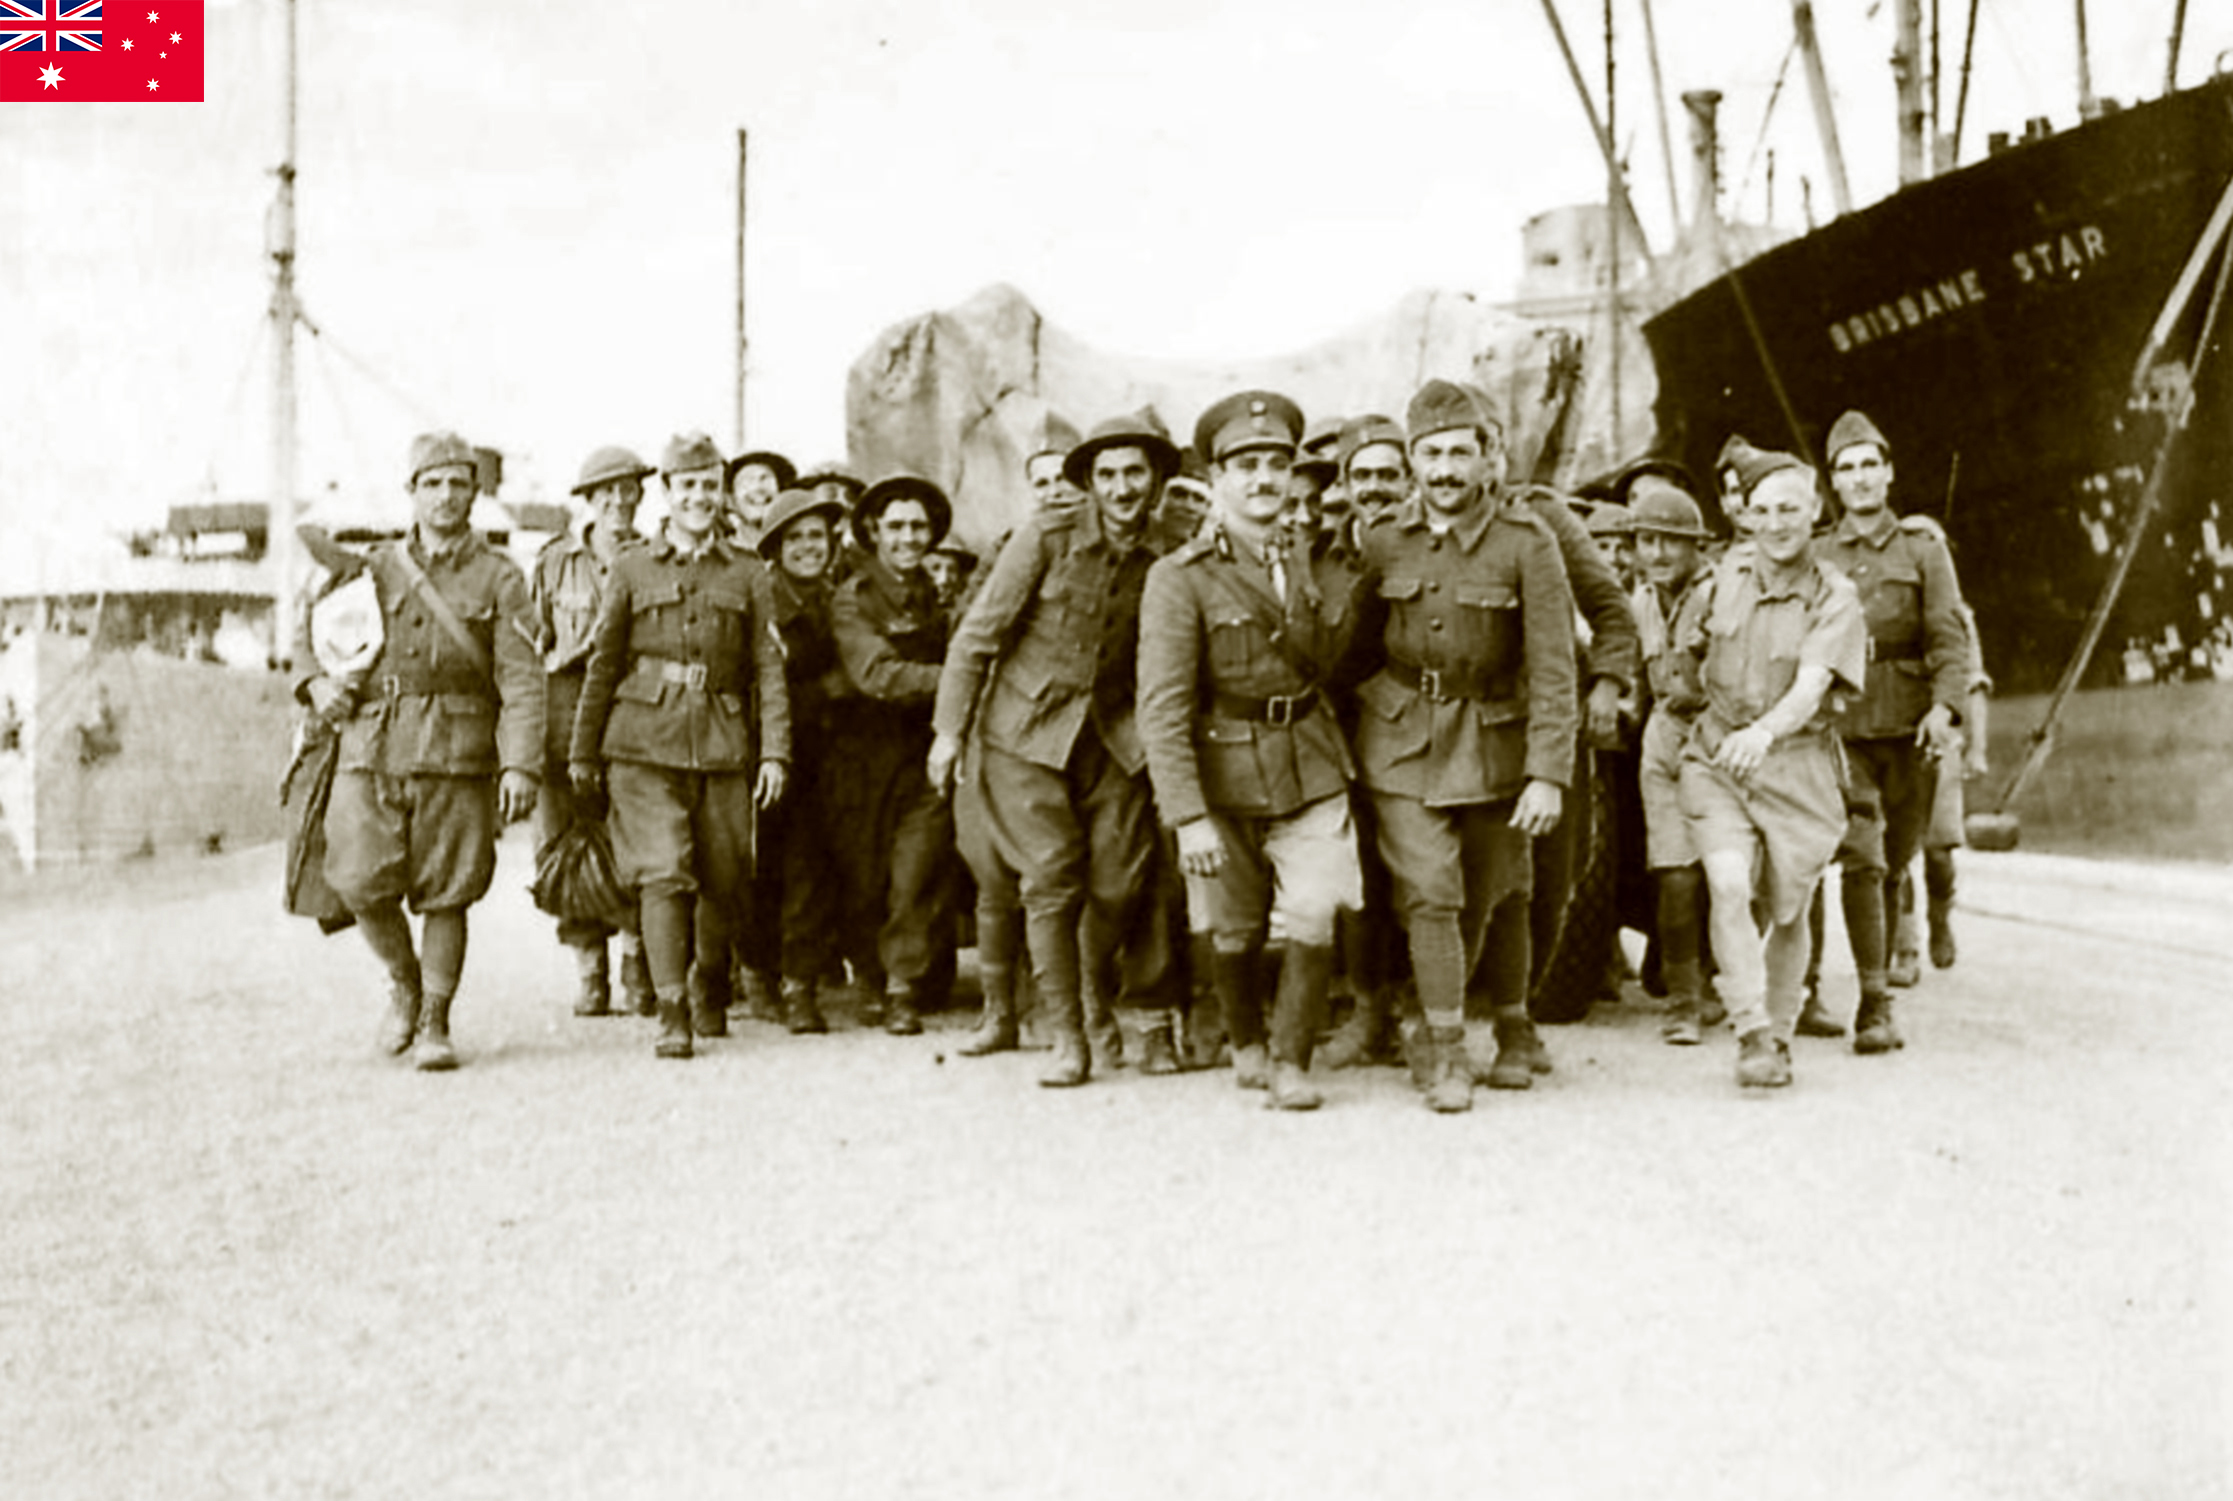 MV Brisbane Star delivers supplies to Crete as troops help move artillery Nov 1941 IWM E1164